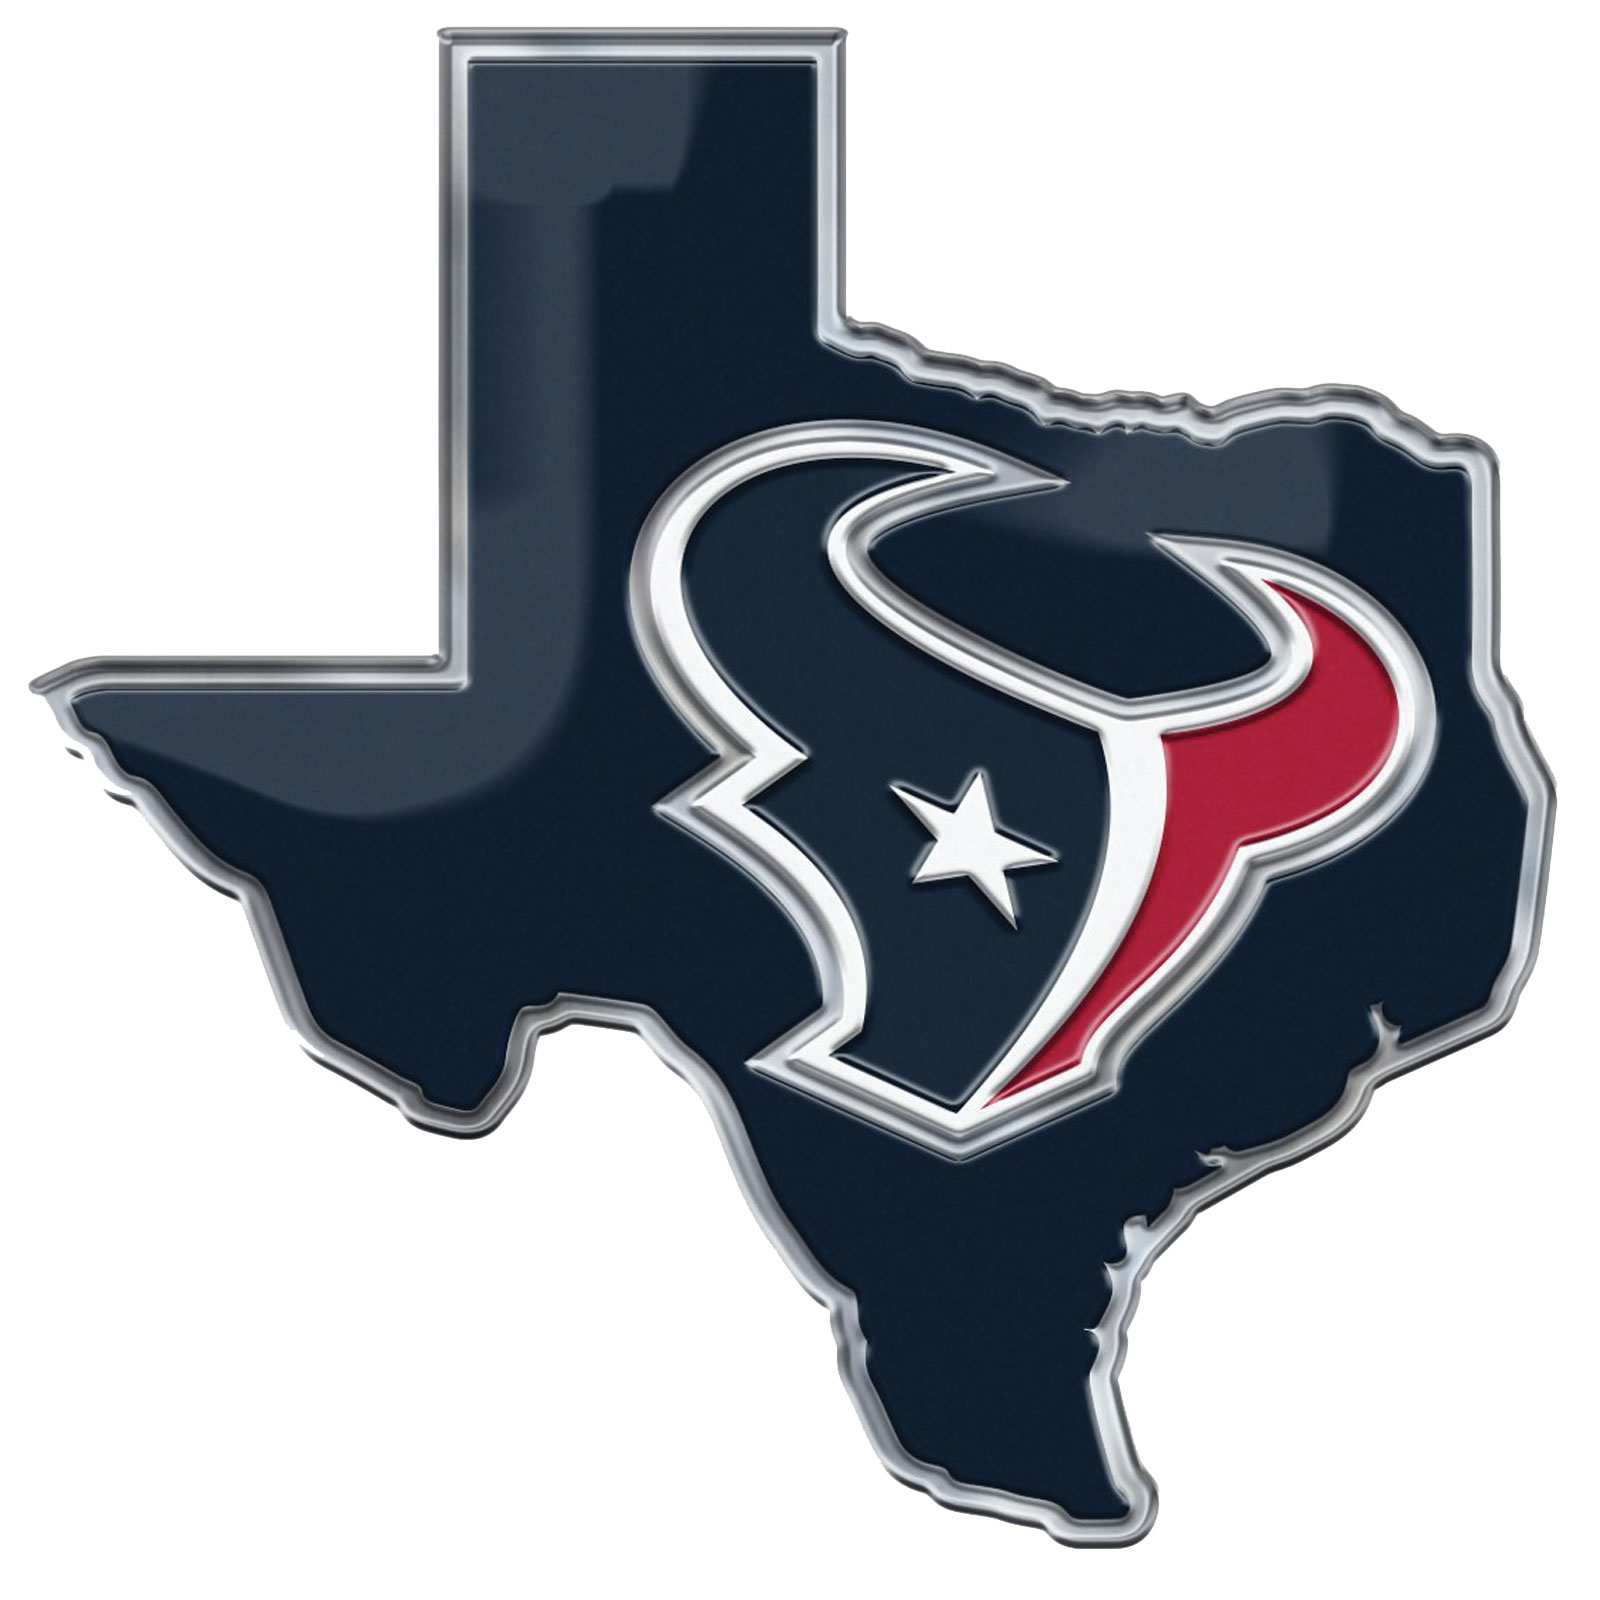 Details about Houston Texans State of Texas NFL Football Color Aluminum Car  Auto Emblem.